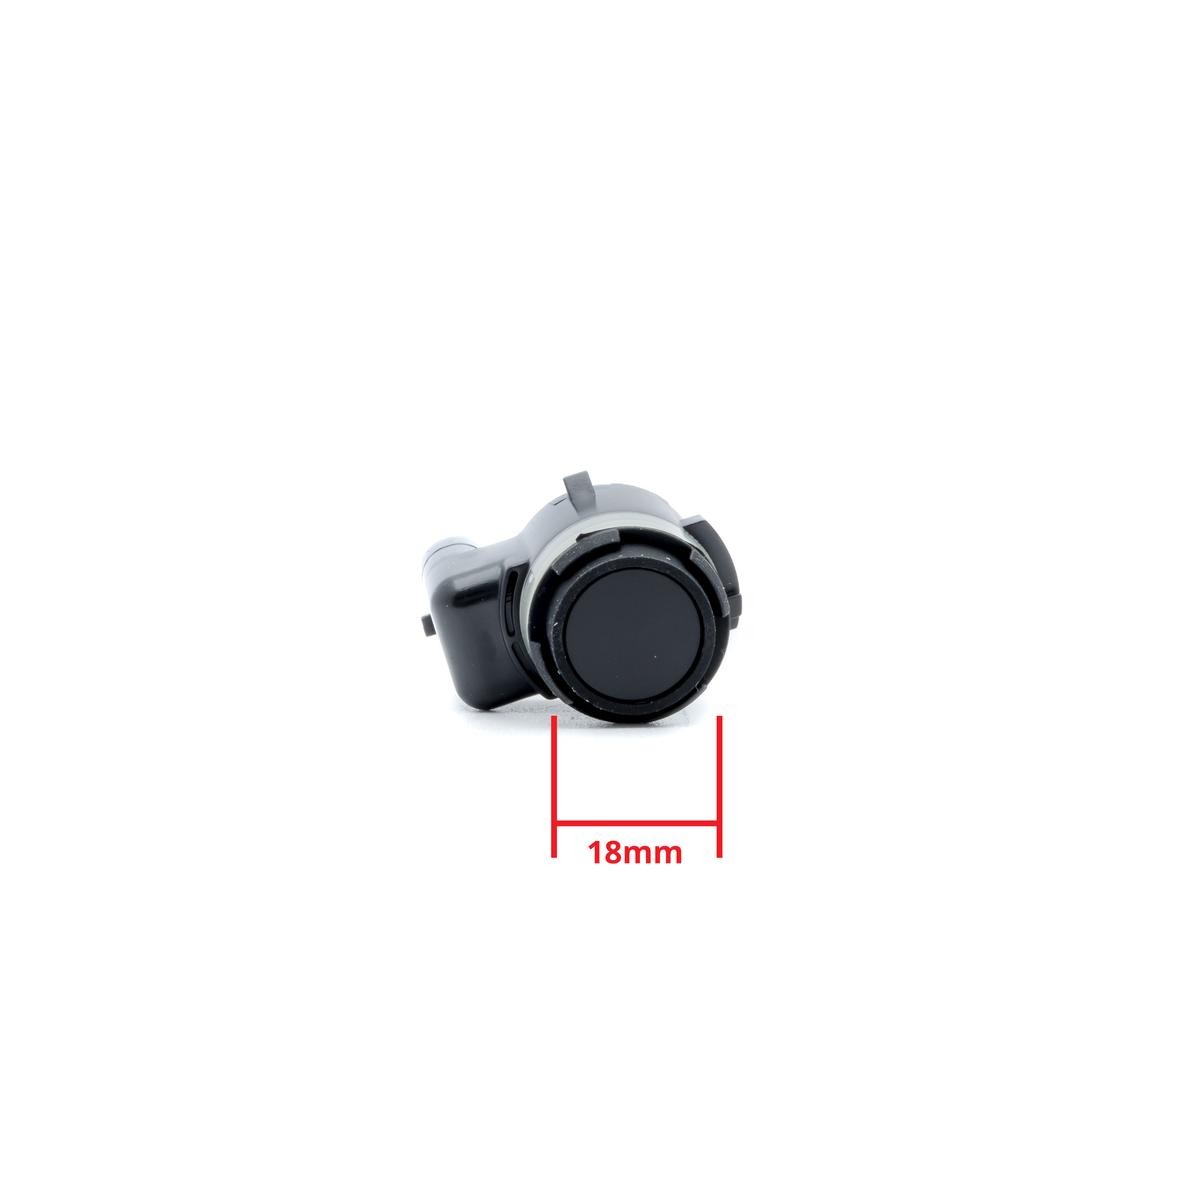 EPPDC45 Park distance control sensors EPPDC45 EINPARTS Front, Rear, black, Ultrasonic Sensor